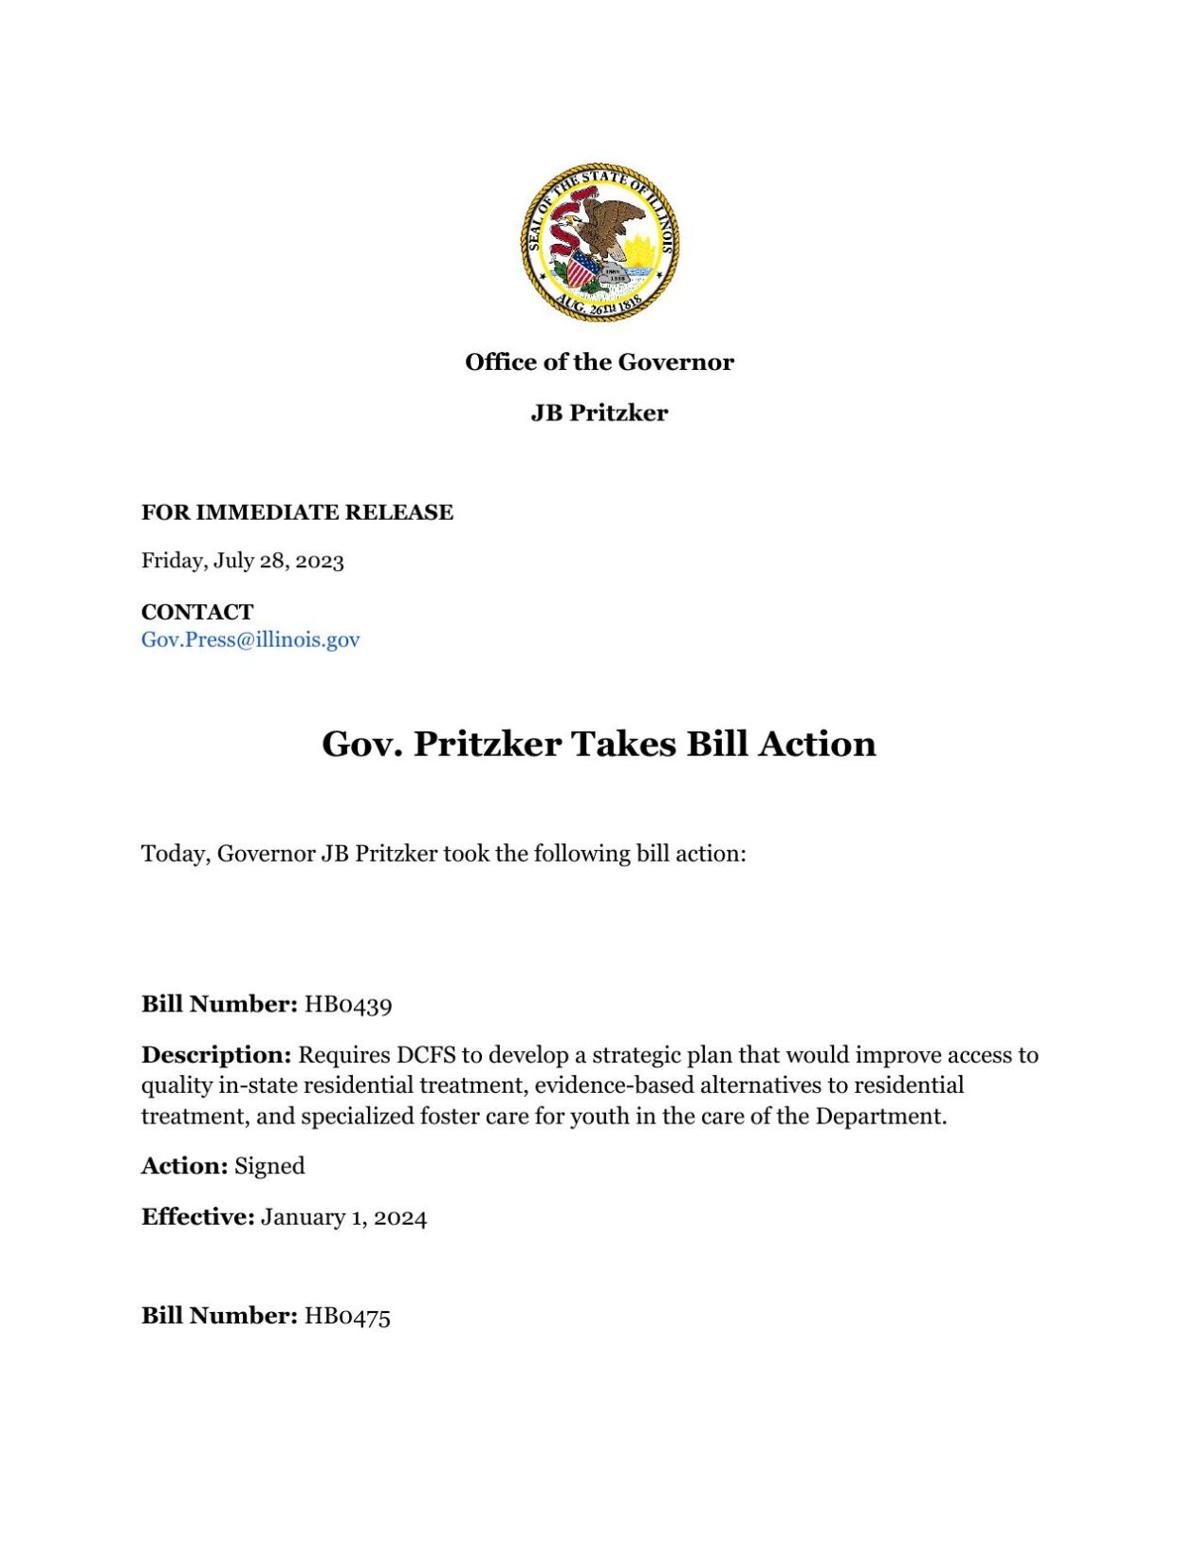 A list of more 130 bills Illinois Gov. J.B. Pritzker announced were signed